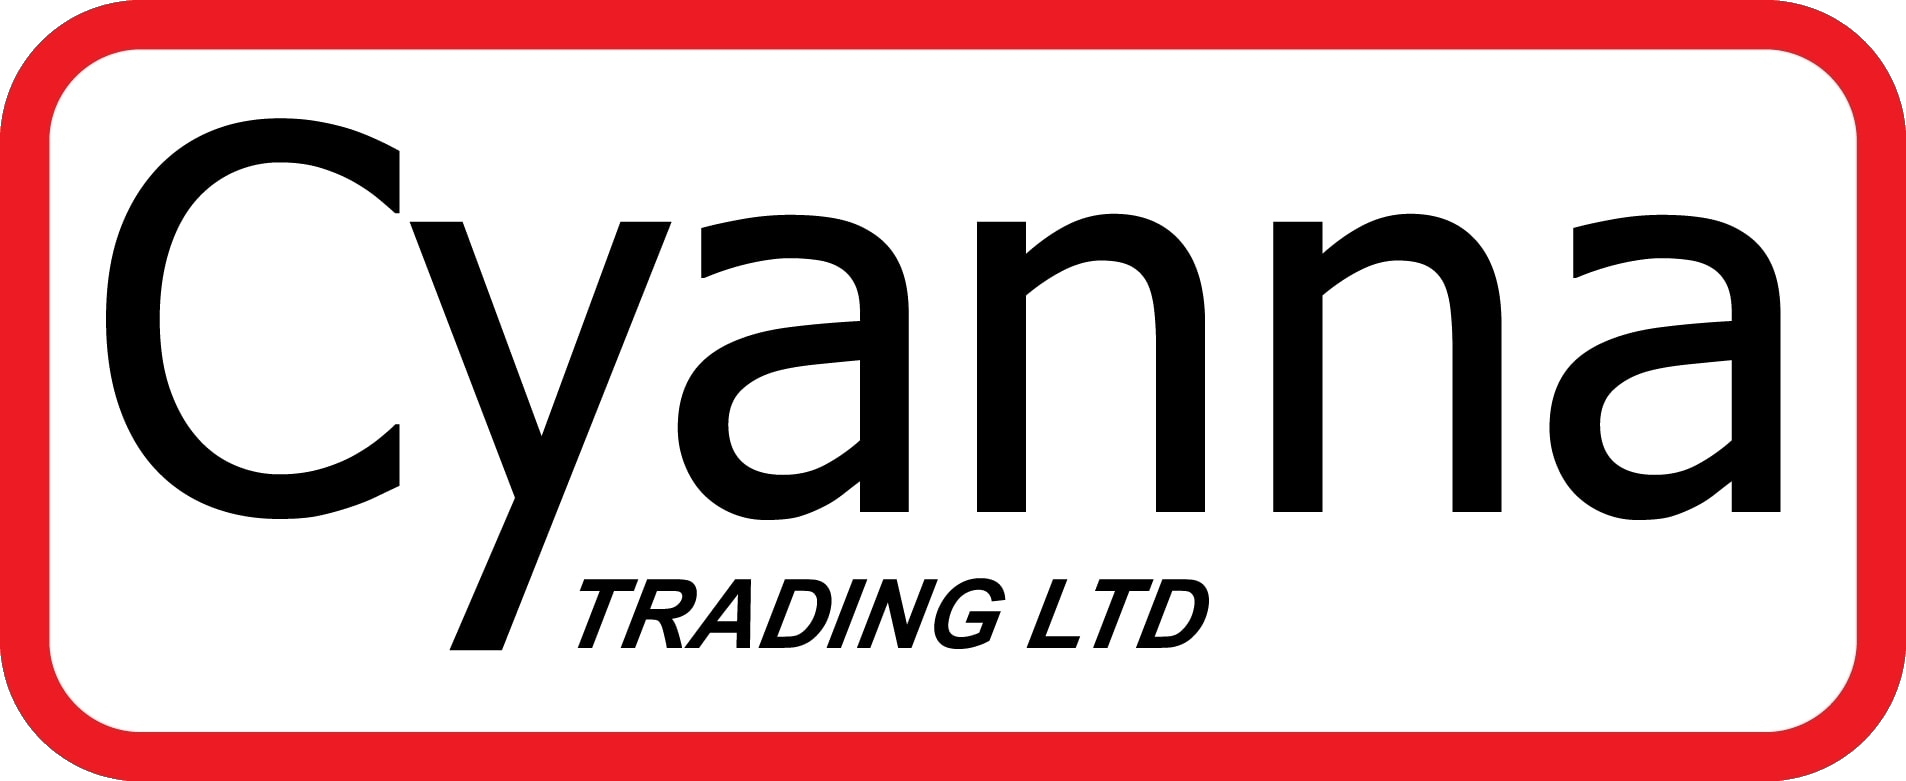 Cyanna Trading Ltd